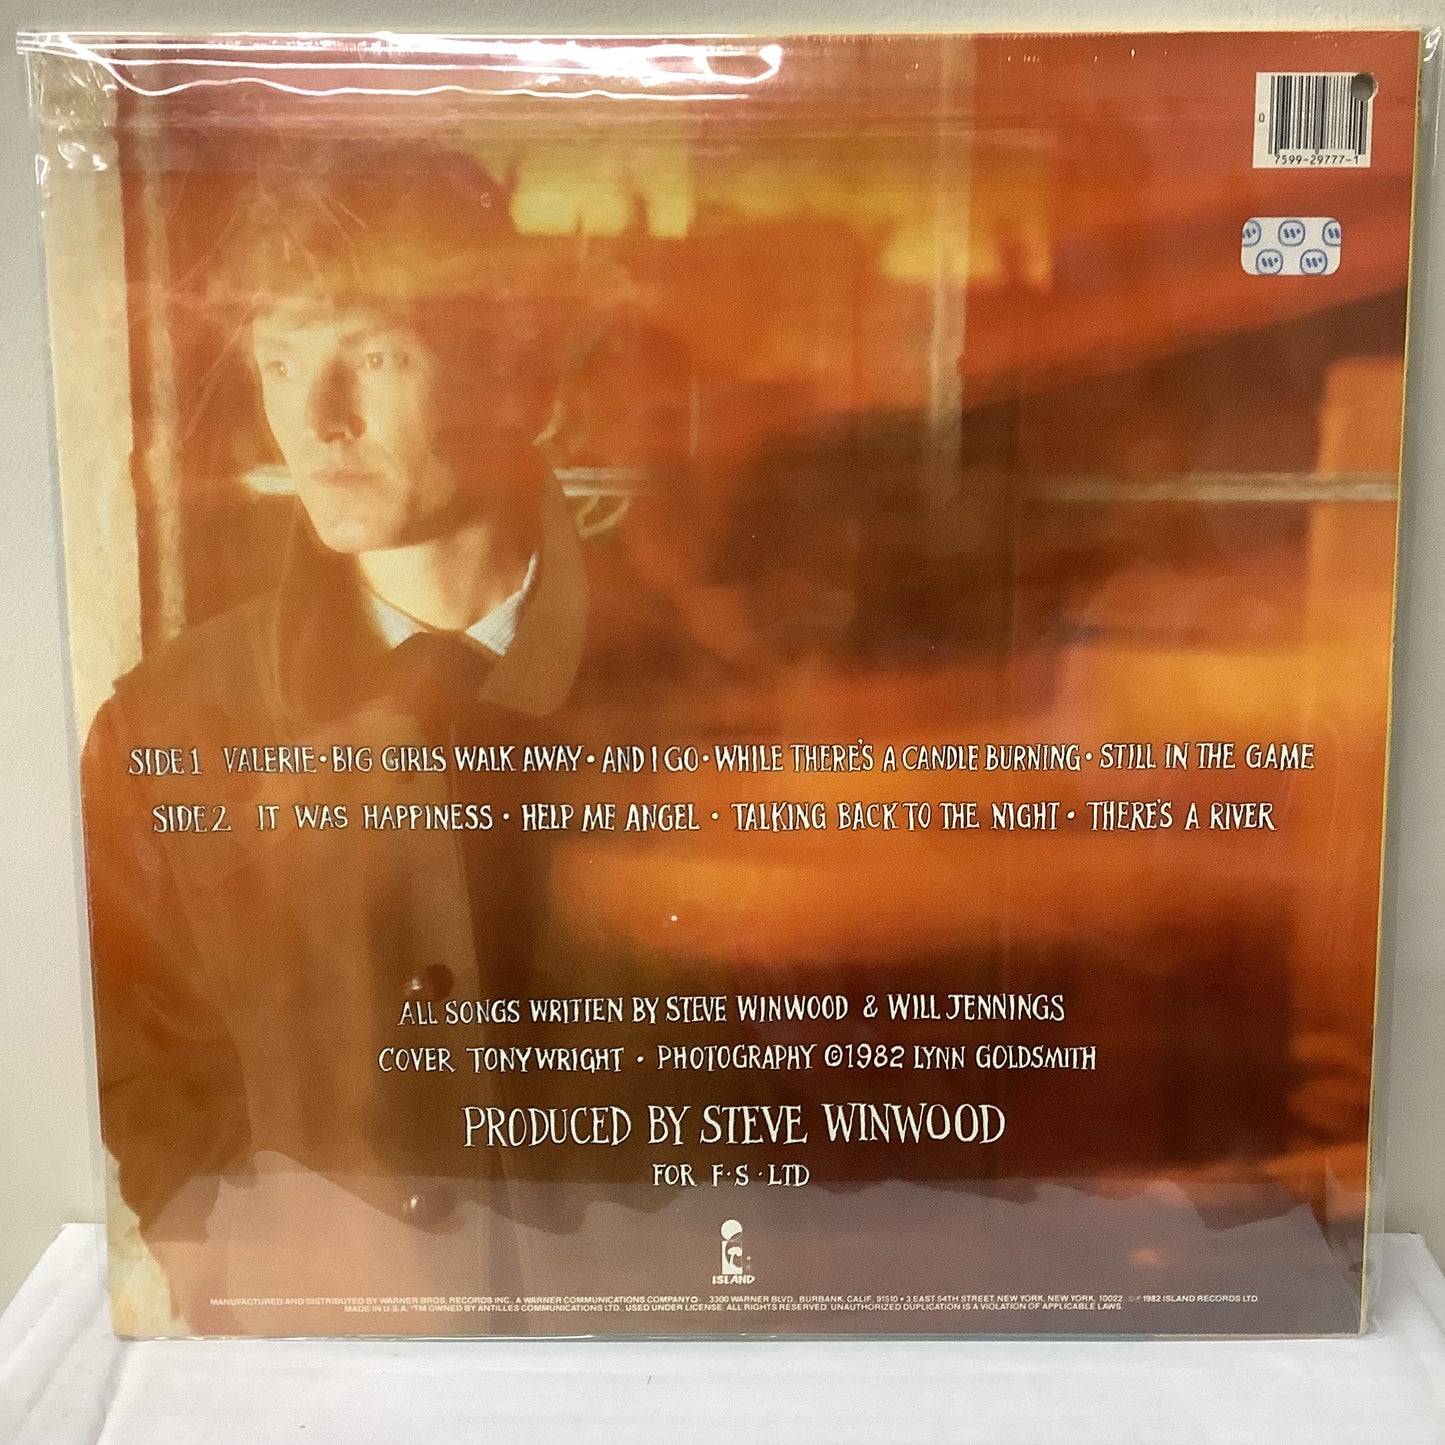 Steve Winwood - Talking Back to the Night - LP